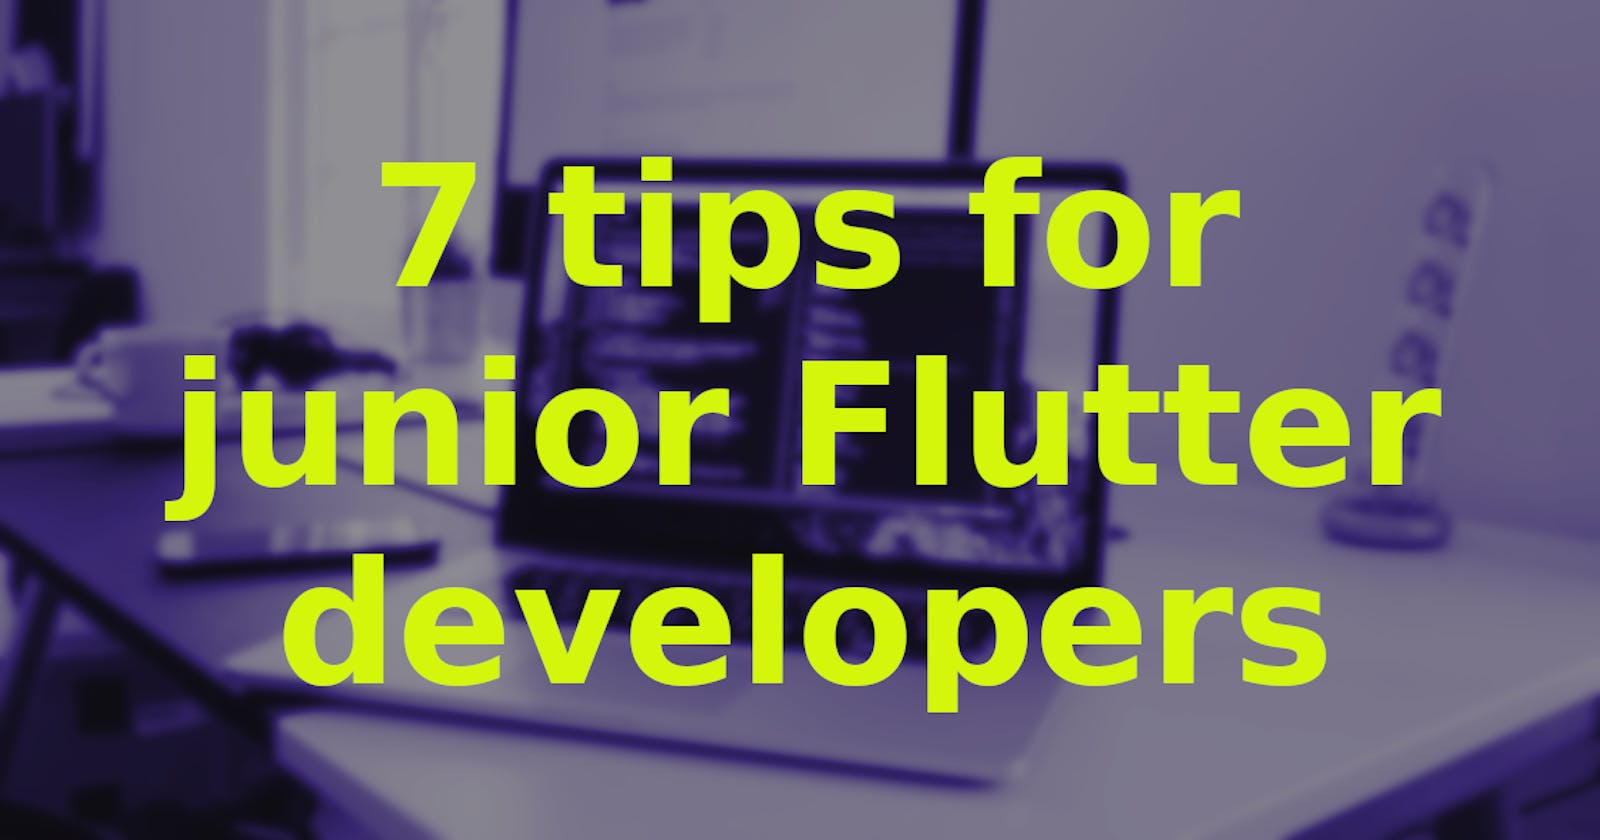 7 tips for junior Flutter developers